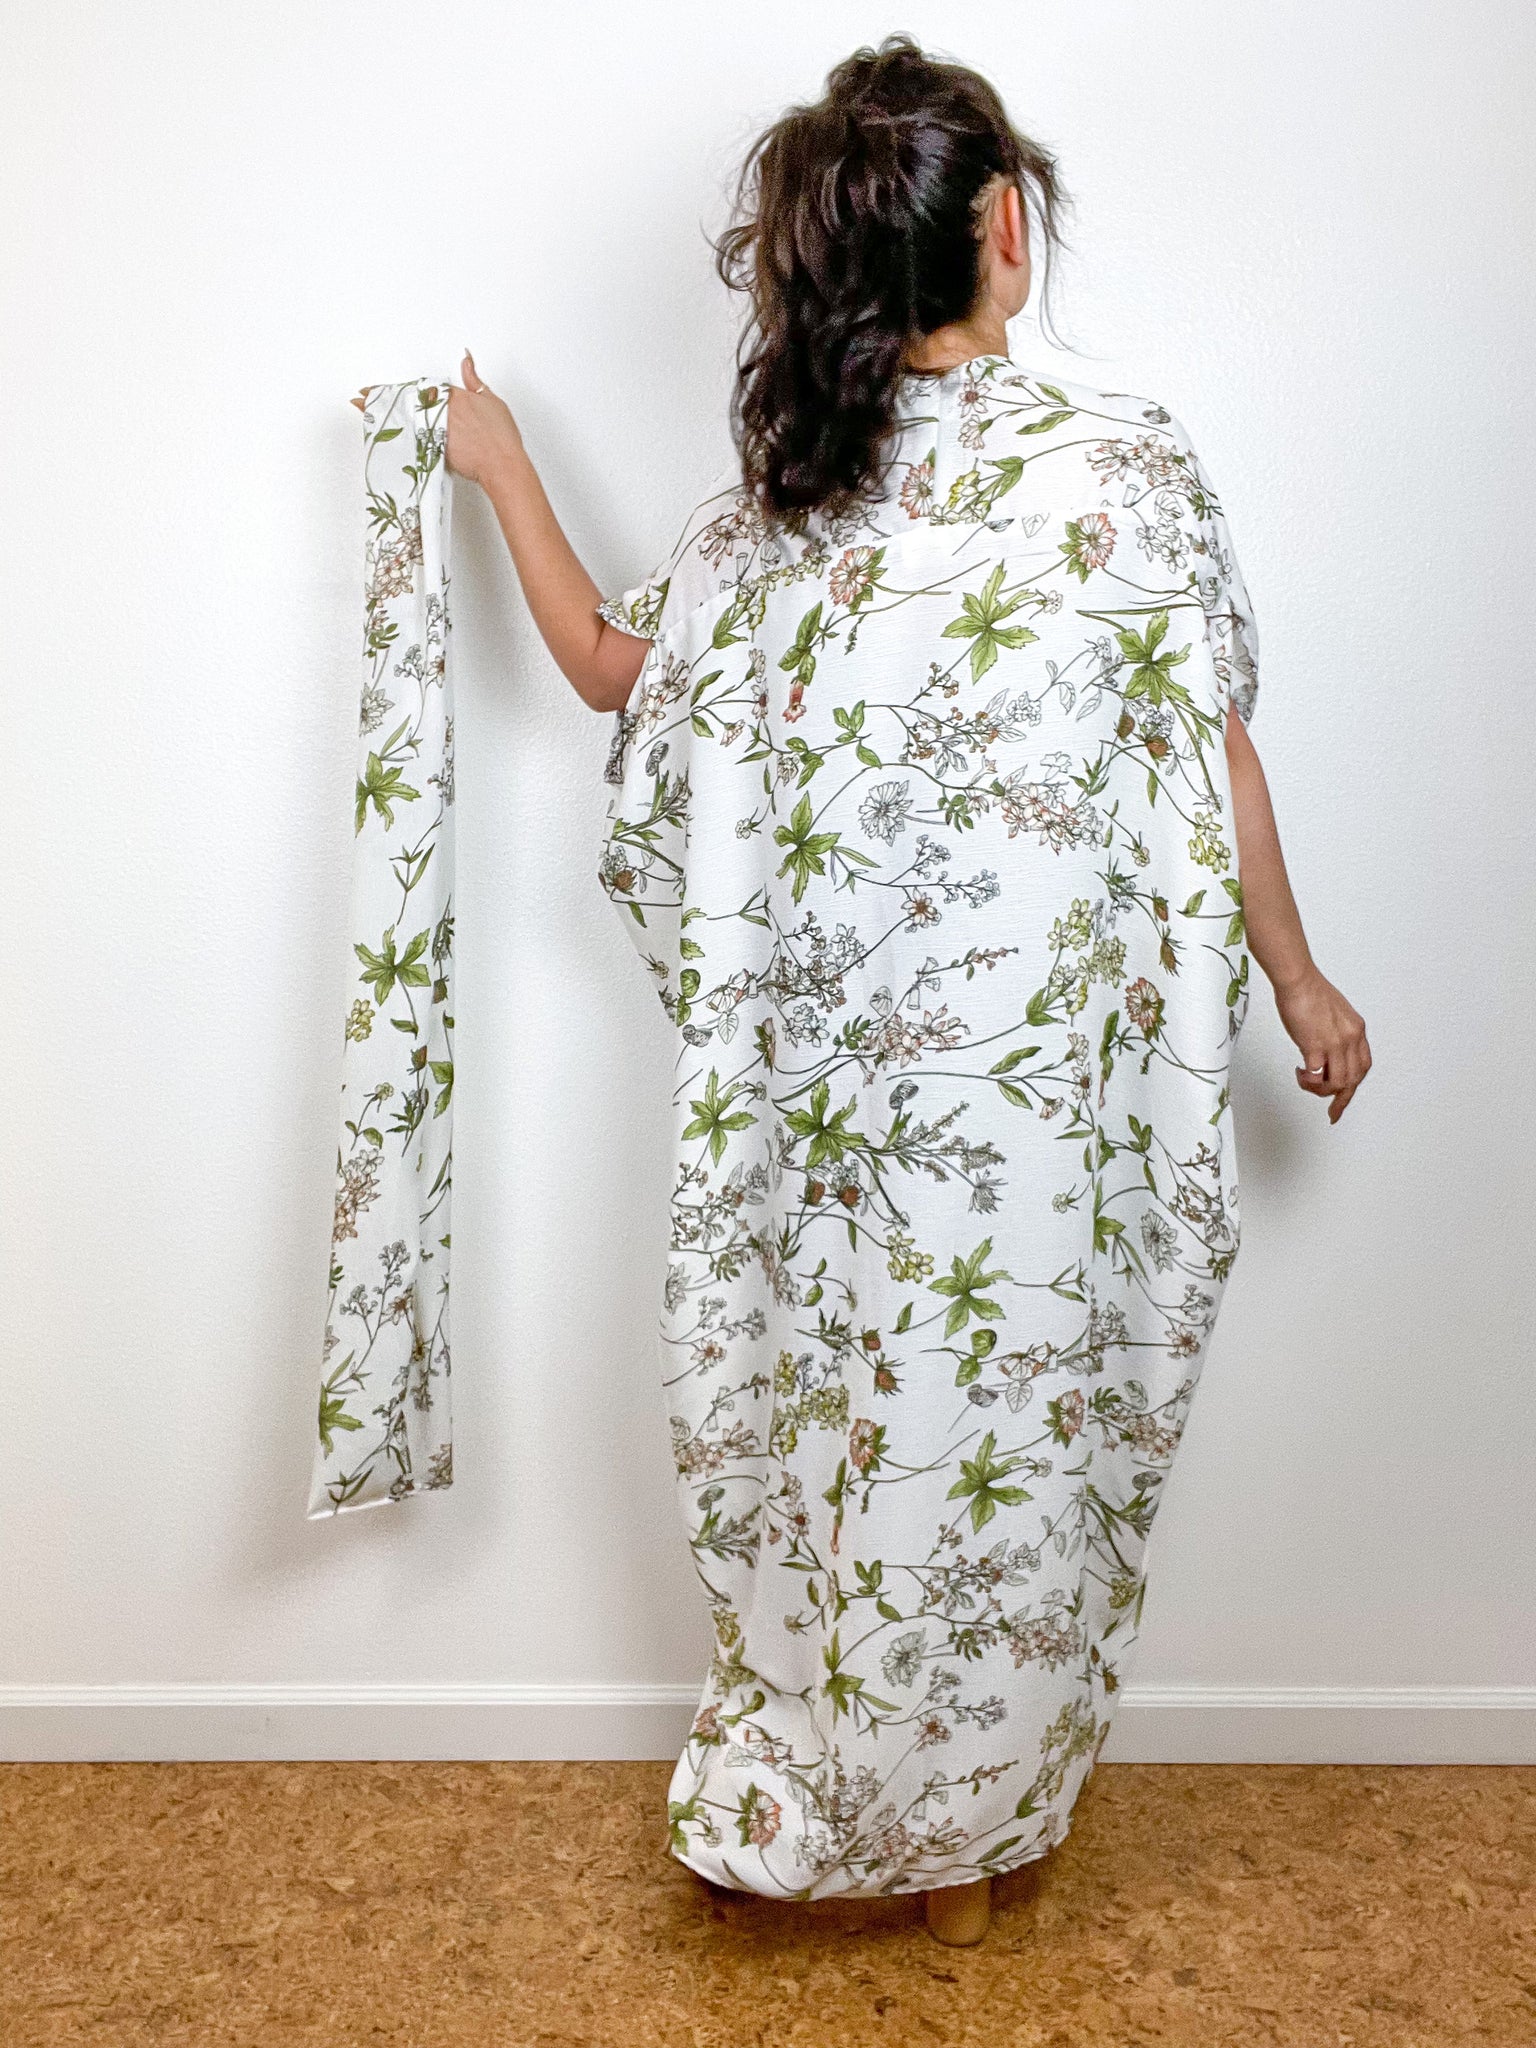 Print High Low Kimono White Wildflower Crinkle Gauze